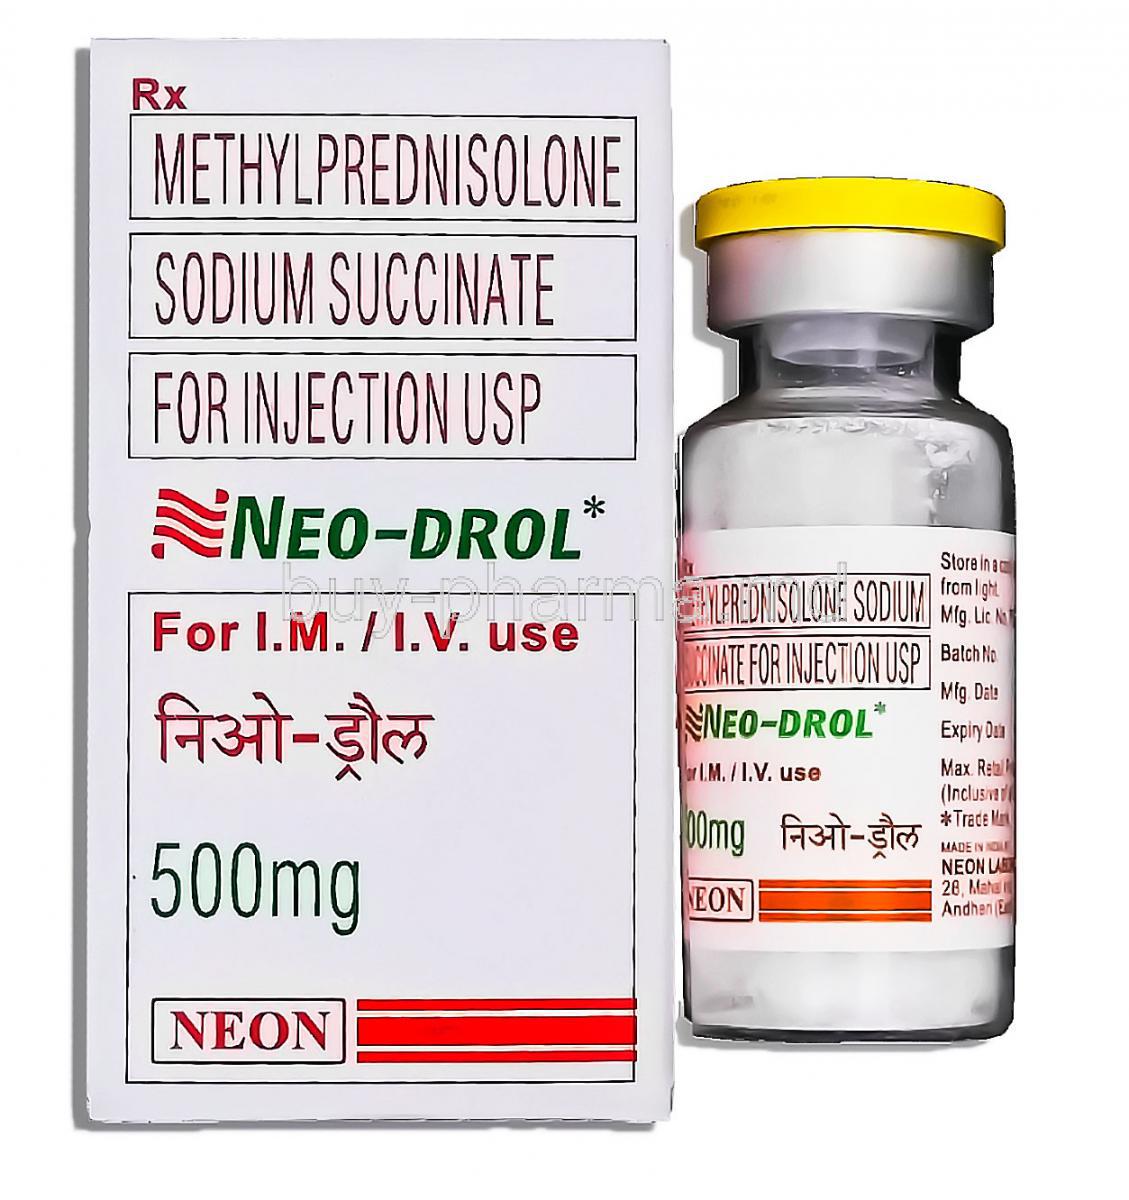 Neo-Drol, Generic Medrol,   Methylprednisolone 500mg Injection Per Vial (Neon)